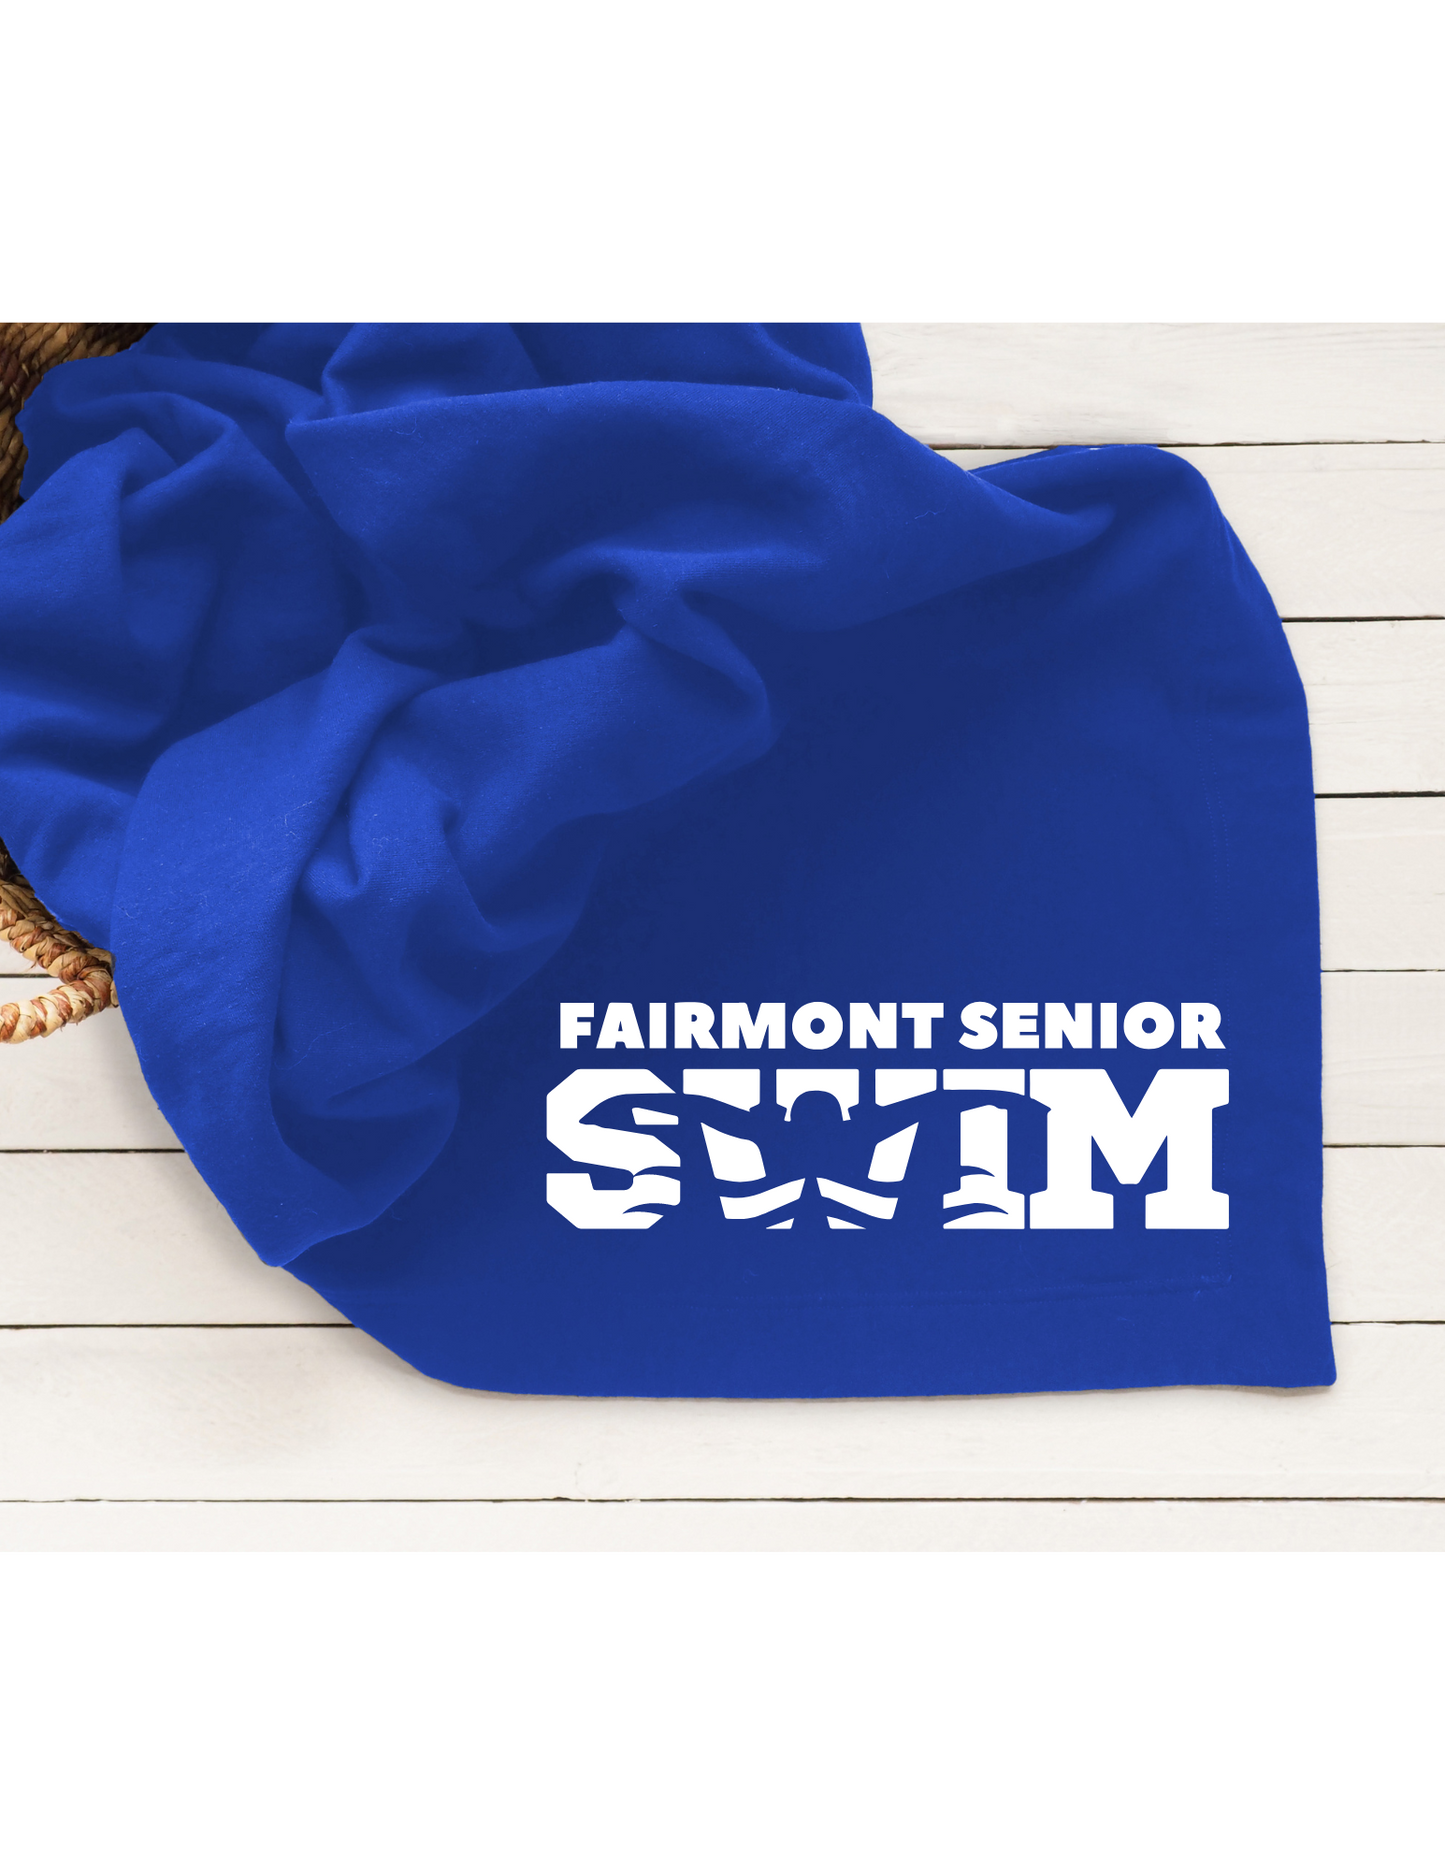 FSHS Swim Blankets